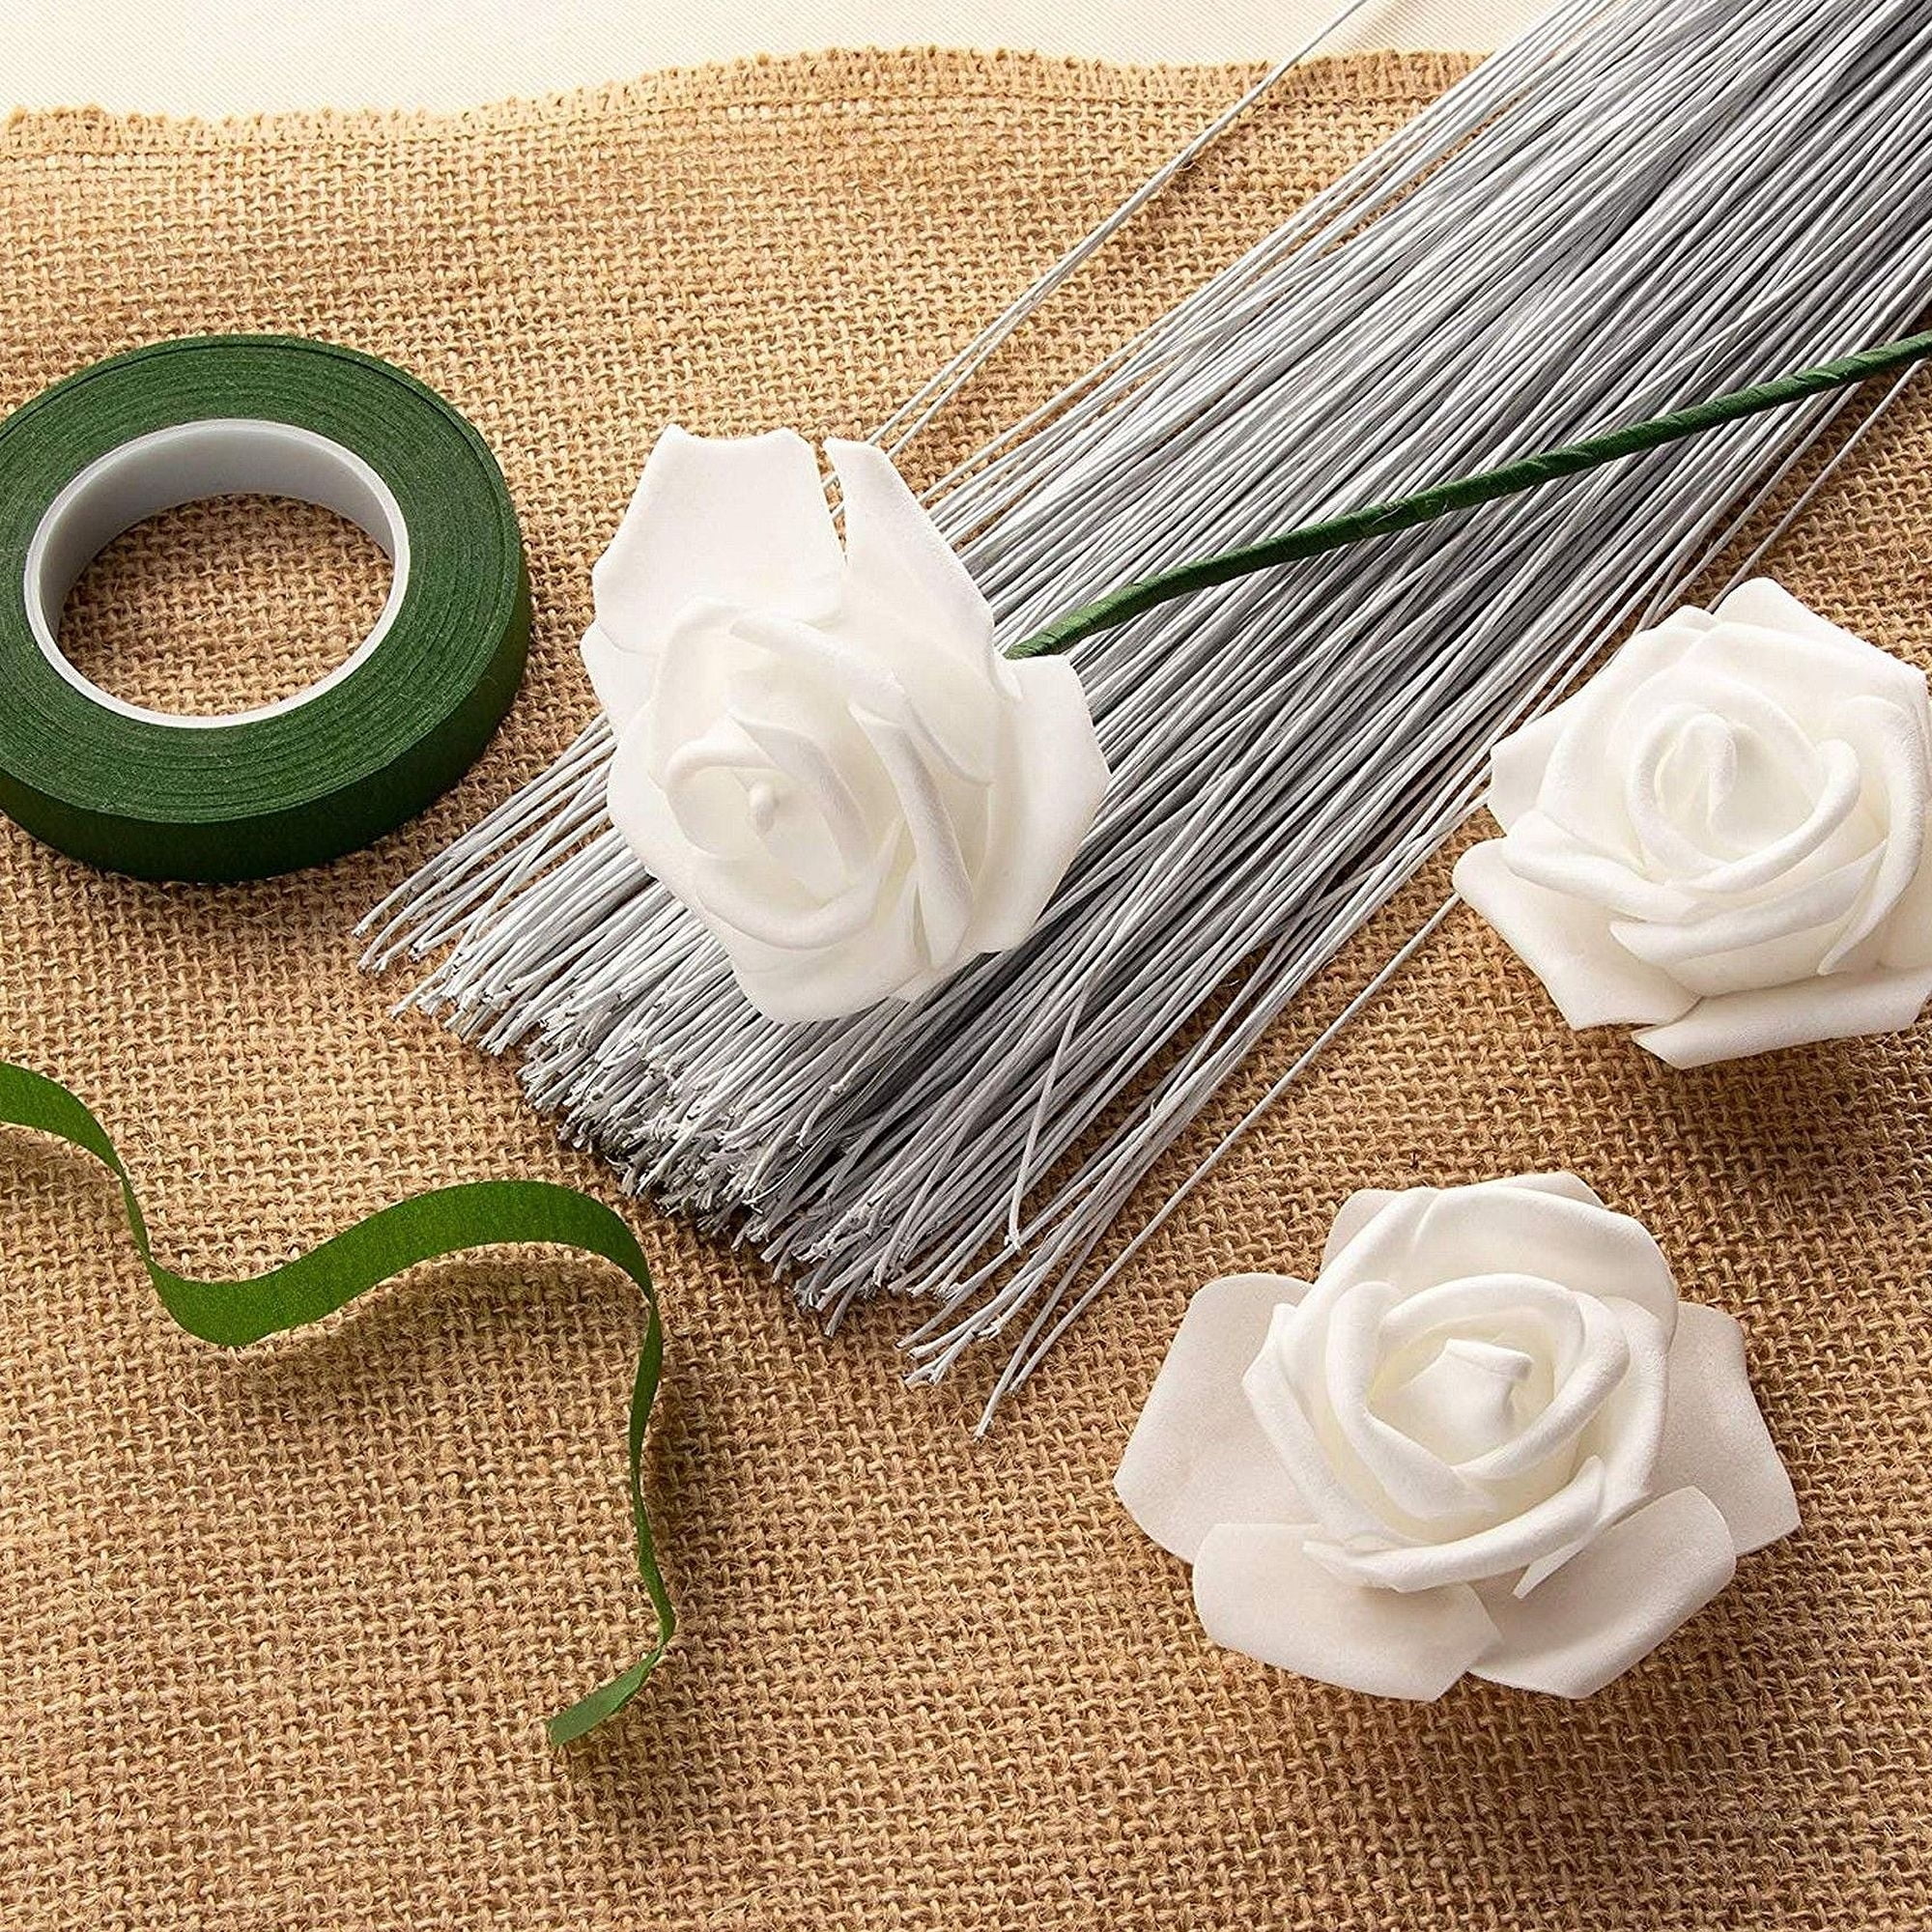 O'Creme 22 Gauge White Florist/Floral Wire 14 inch, 50 Pieces, Size: 14, 22 Gauge